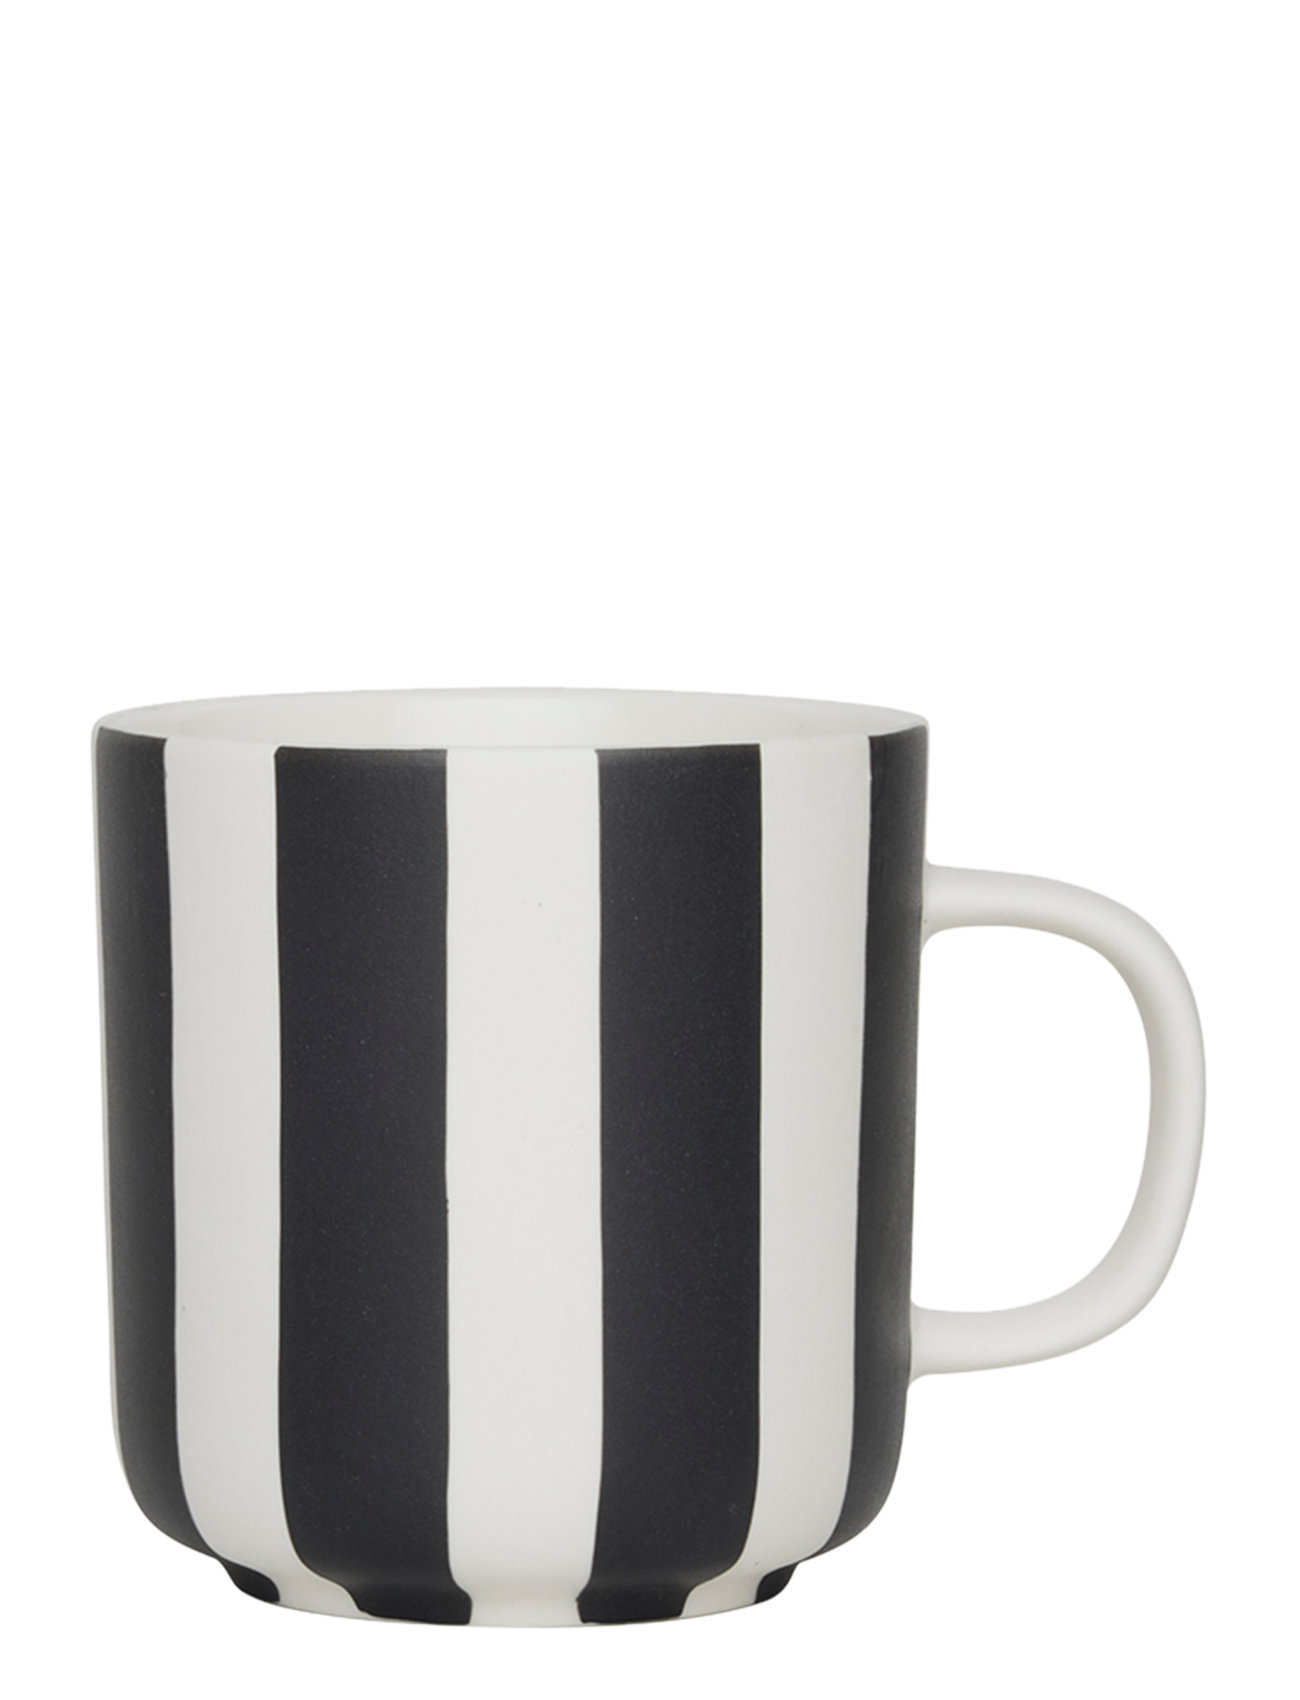 Toppu Mug Home Tableware Cups & Mugs Coffee Cups Black OYOY Living Design